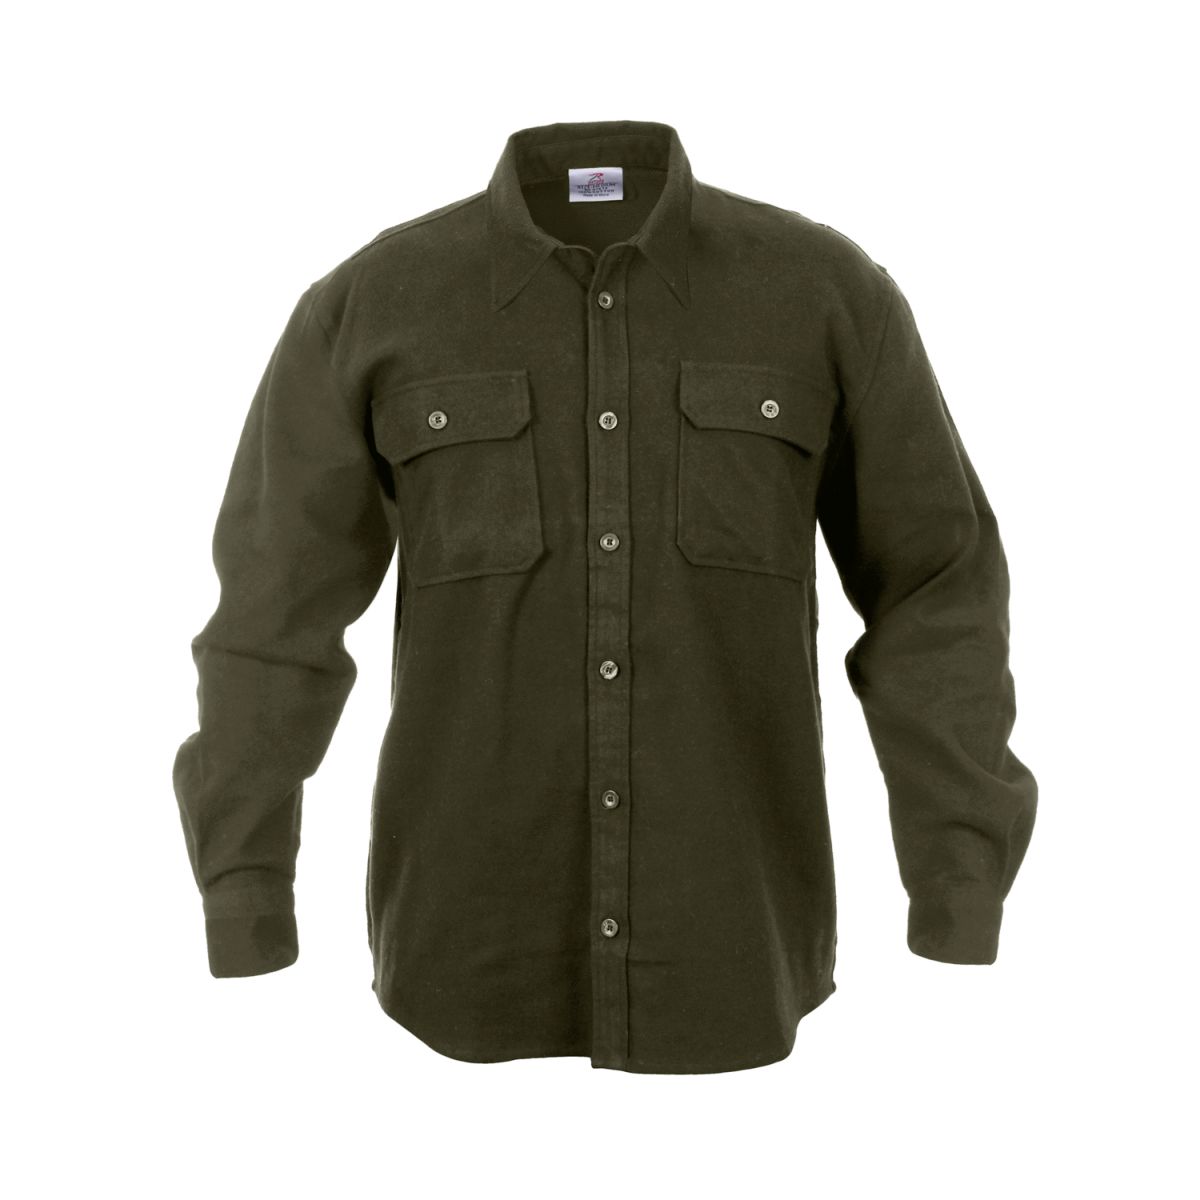 Lumberjack plaid shirt FLANNEL OLIVE ROTHCO 4669 L-11